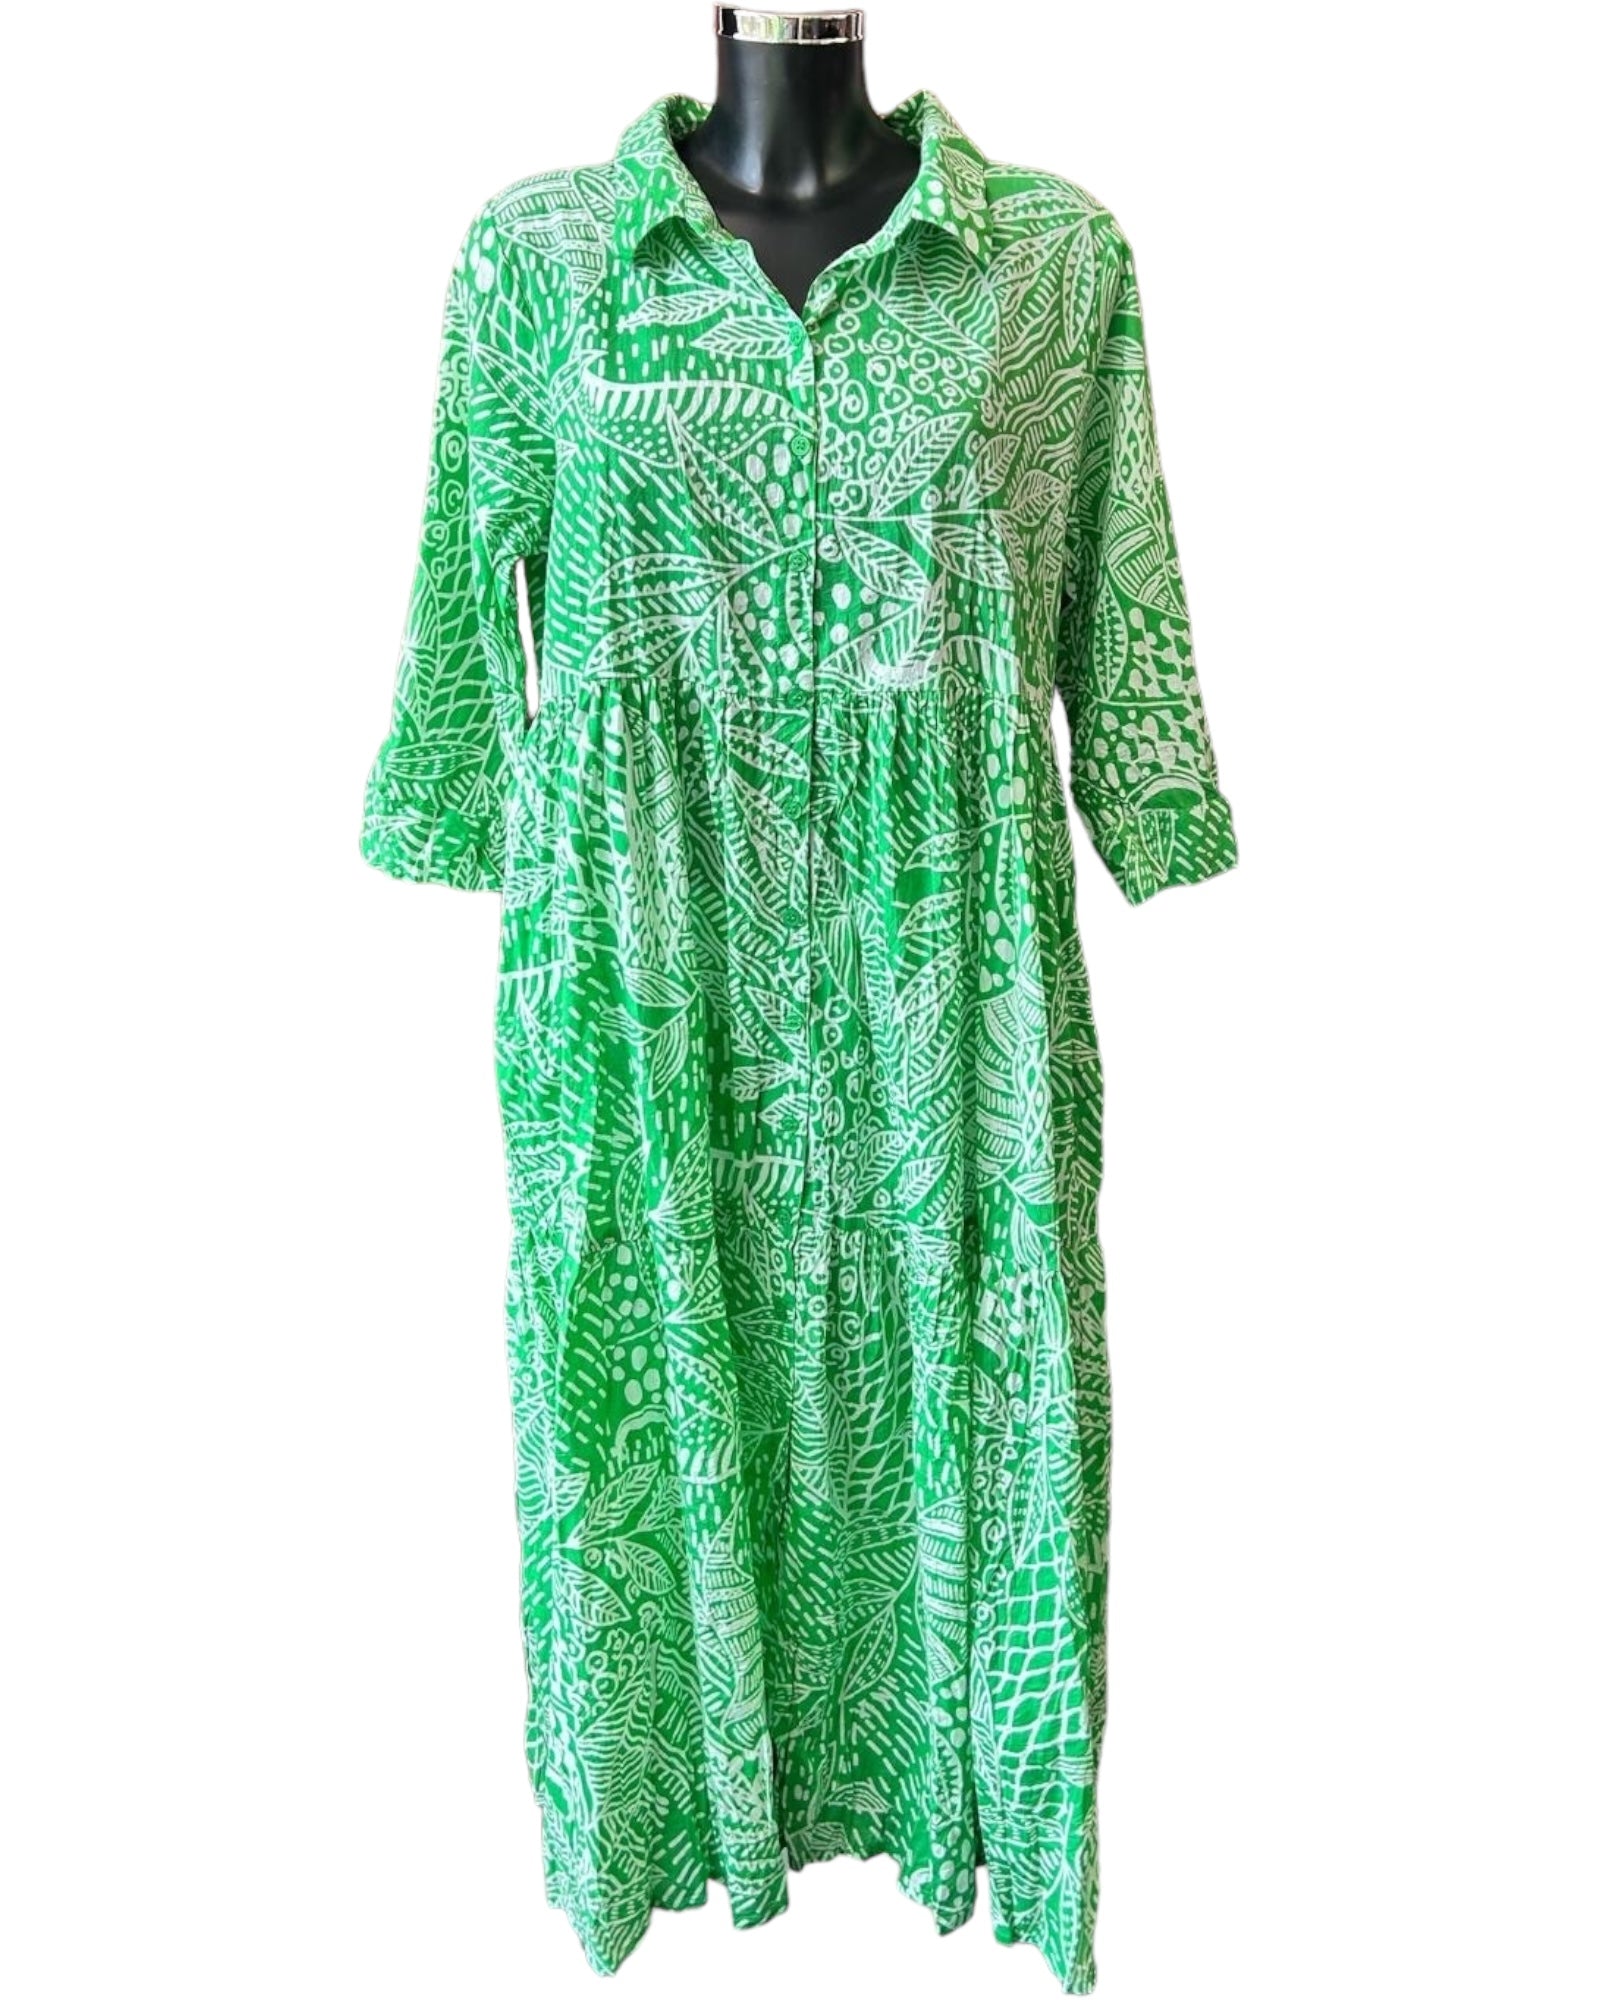 Orientique Leros collared layered shirt dress - Green